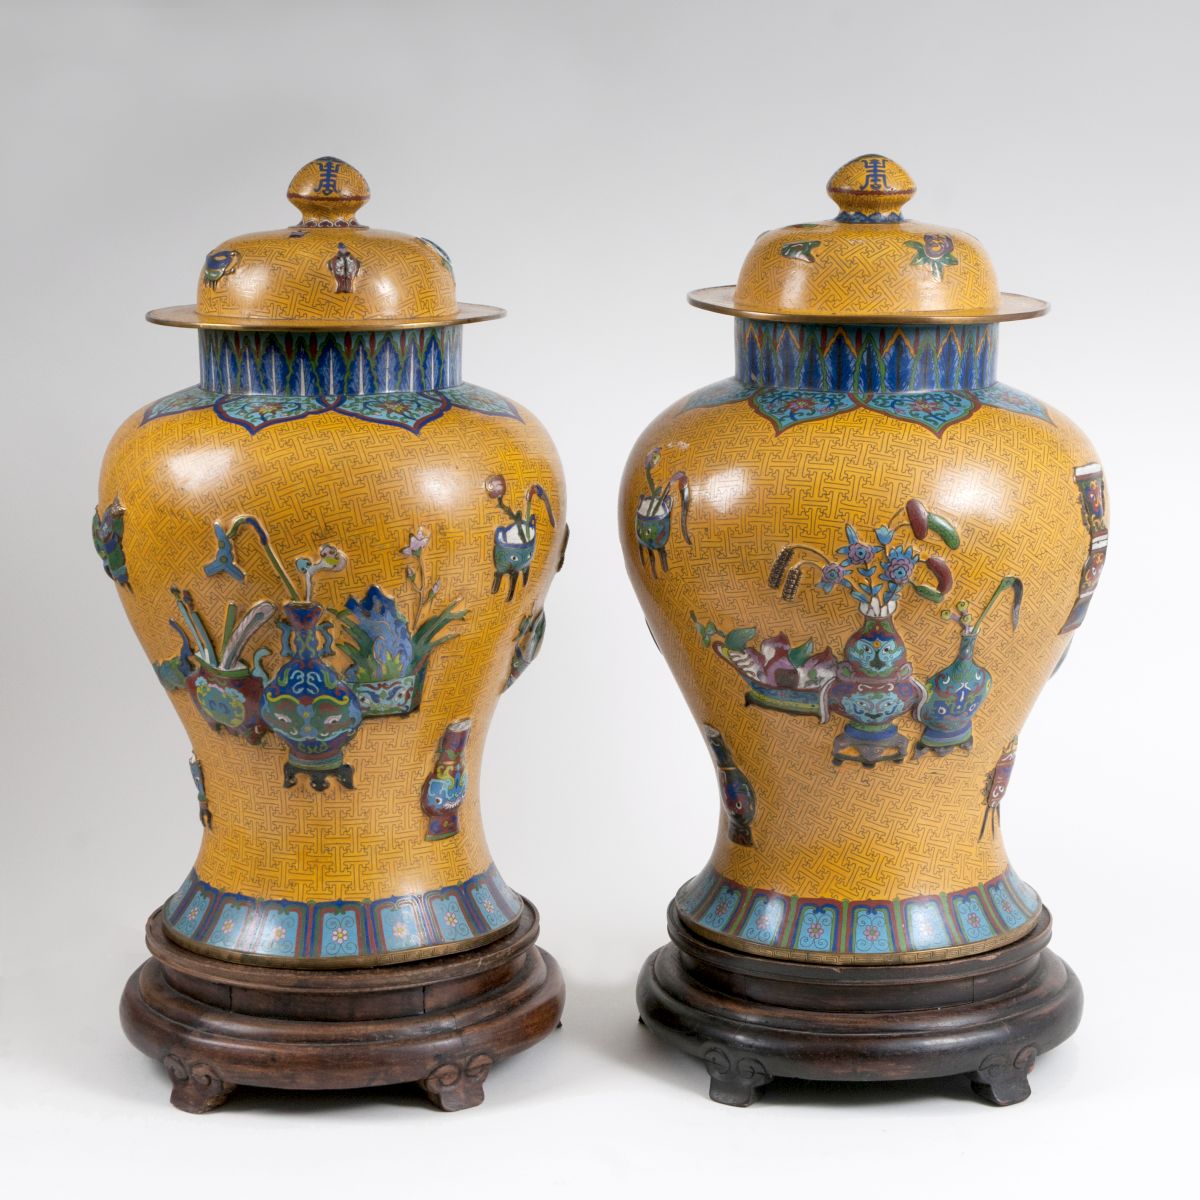 A pair of tall Cloisonné vases